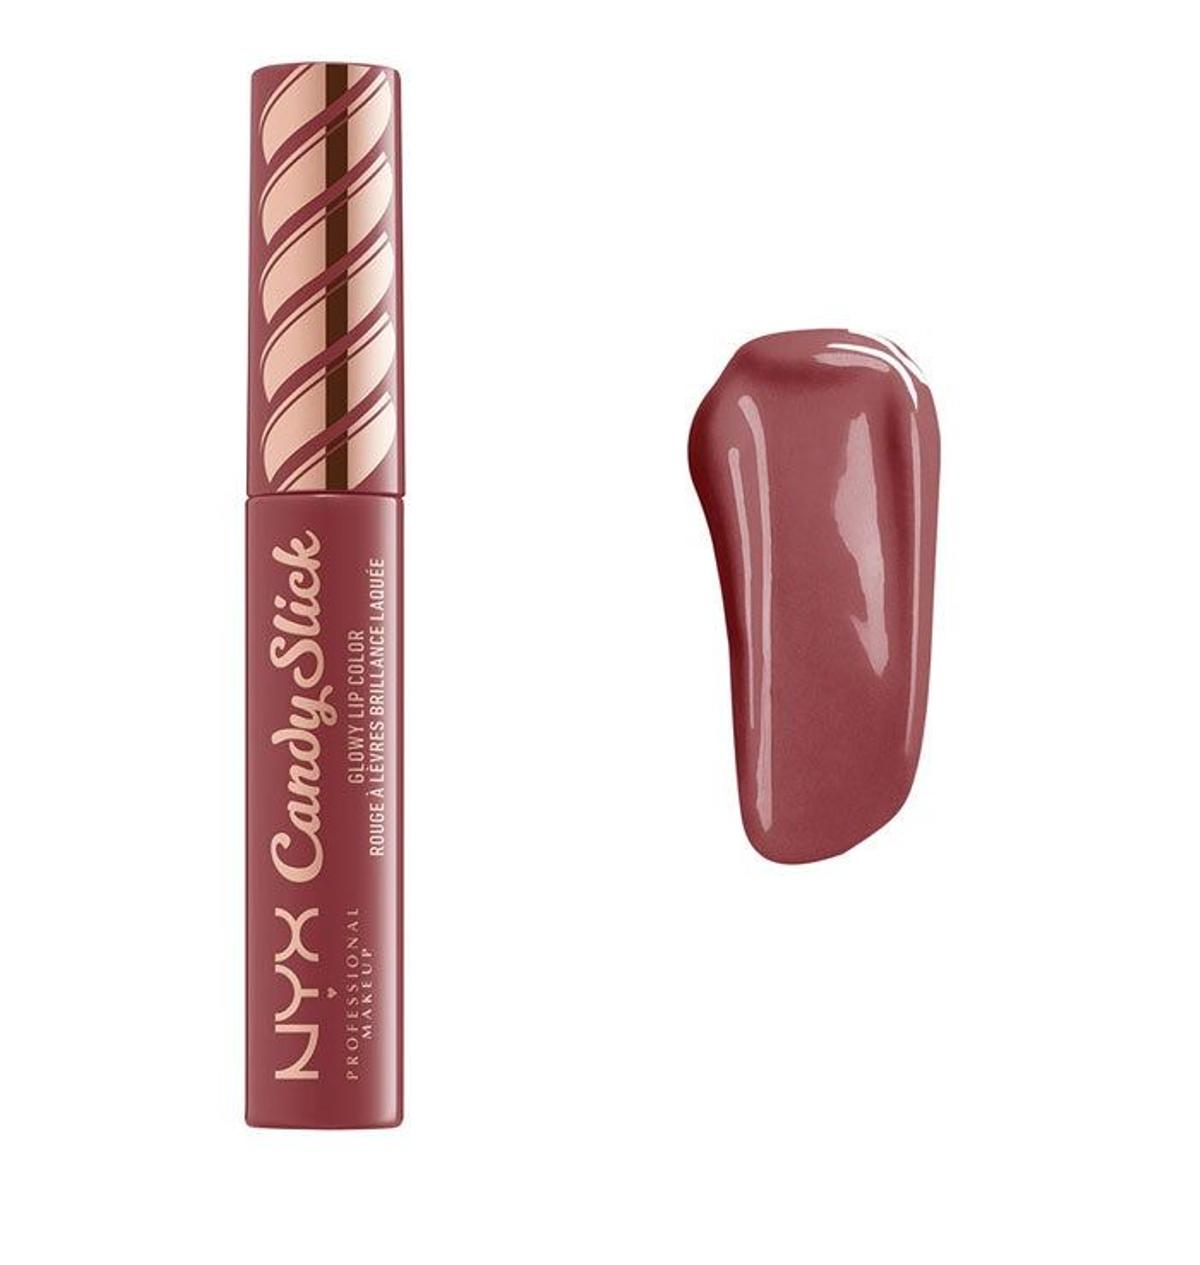 Gloss Candy Slick Glowy Lip Color de NYX (Precio: 6,50 euros)